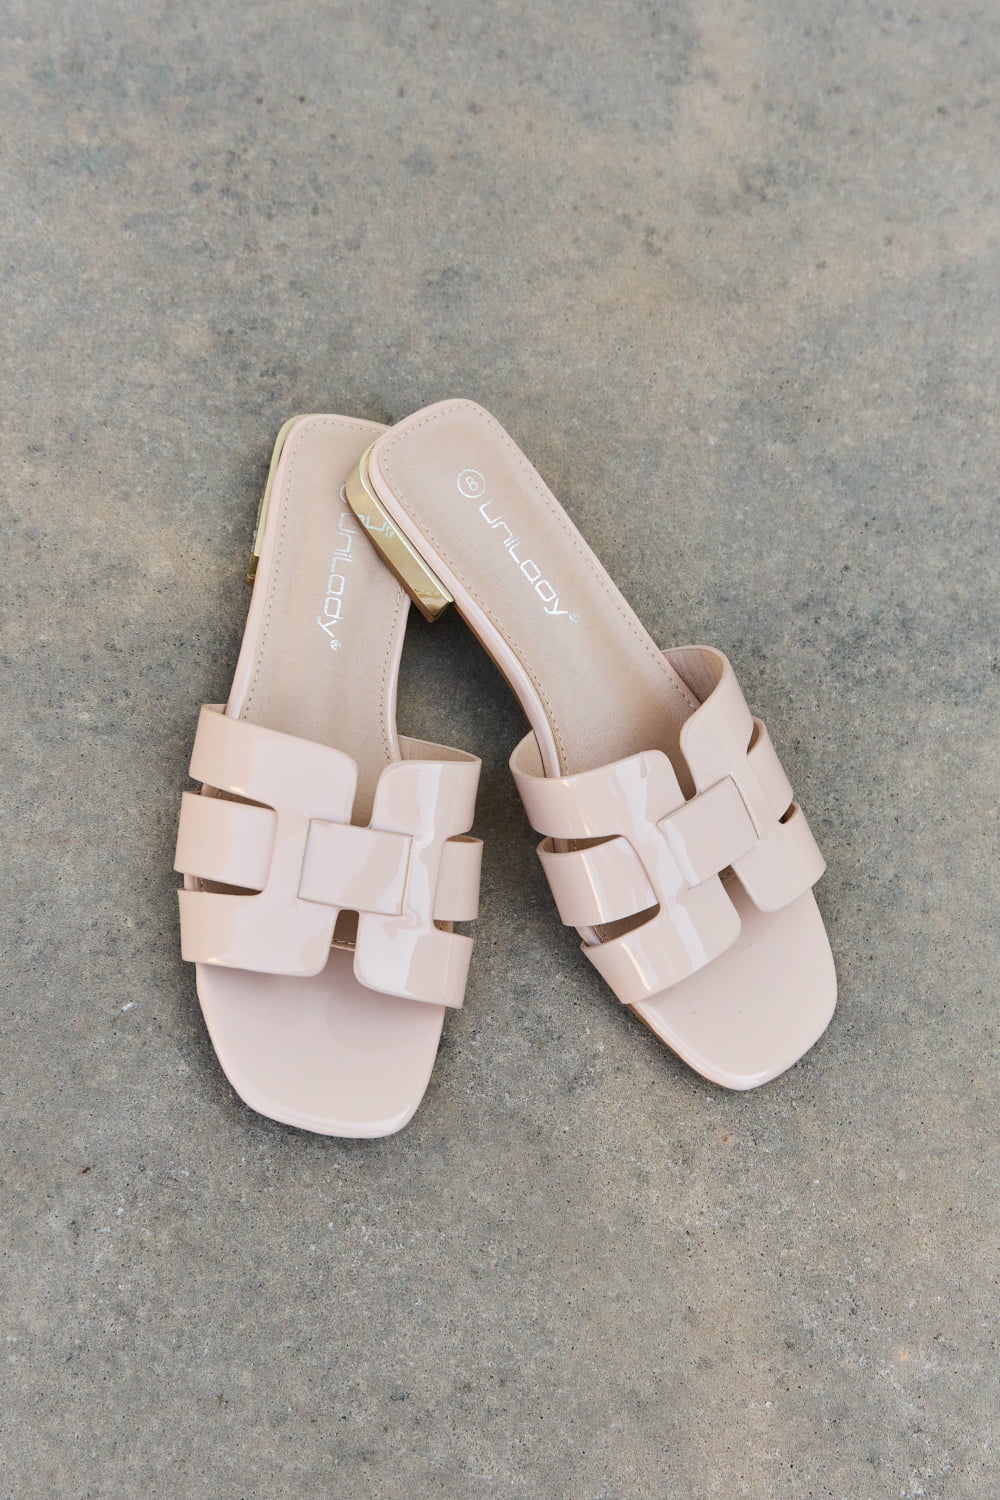 Sandy Peach Vegan Leather Women's Sandals | Hypoallergenic - Allergy Friendly - Naturally Free